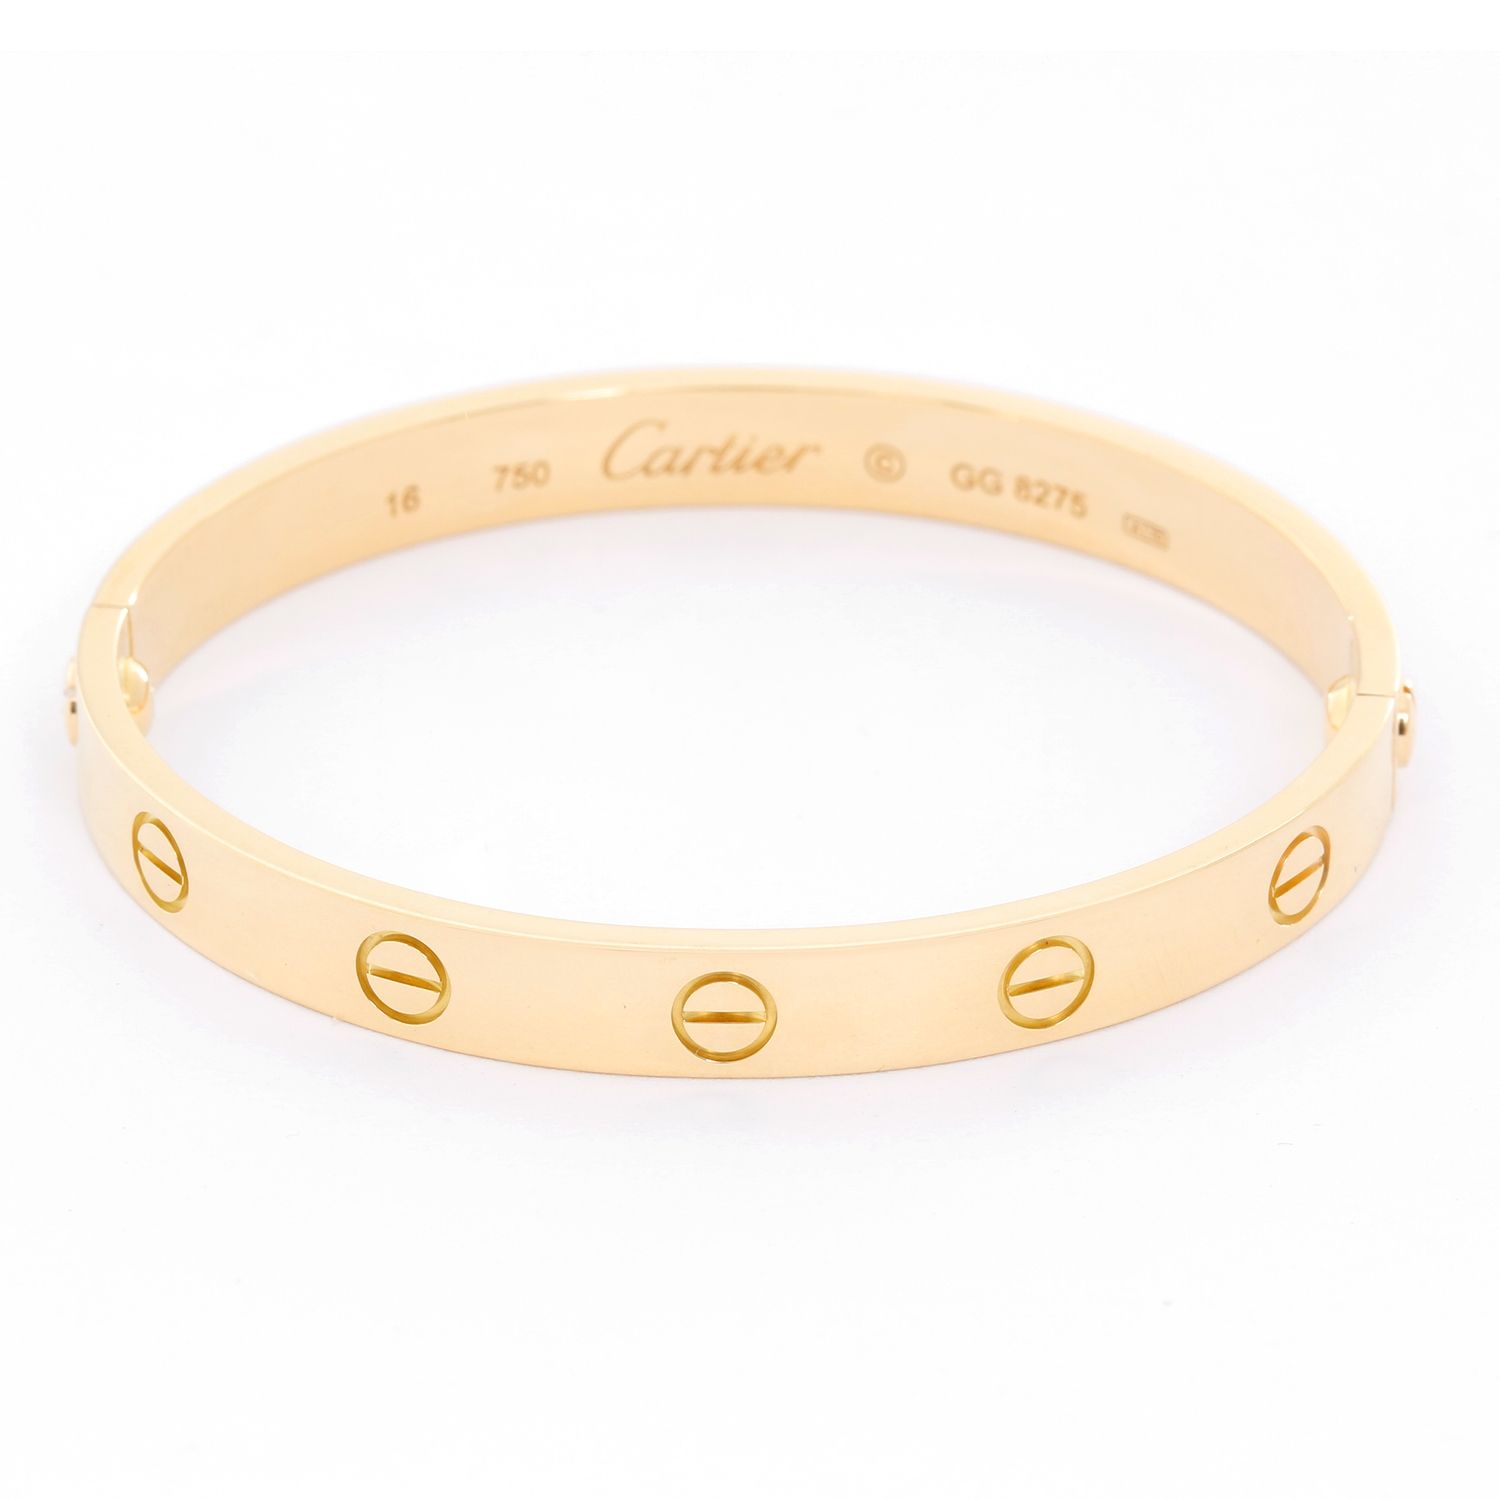 how big is size 16 cartier love bracelet